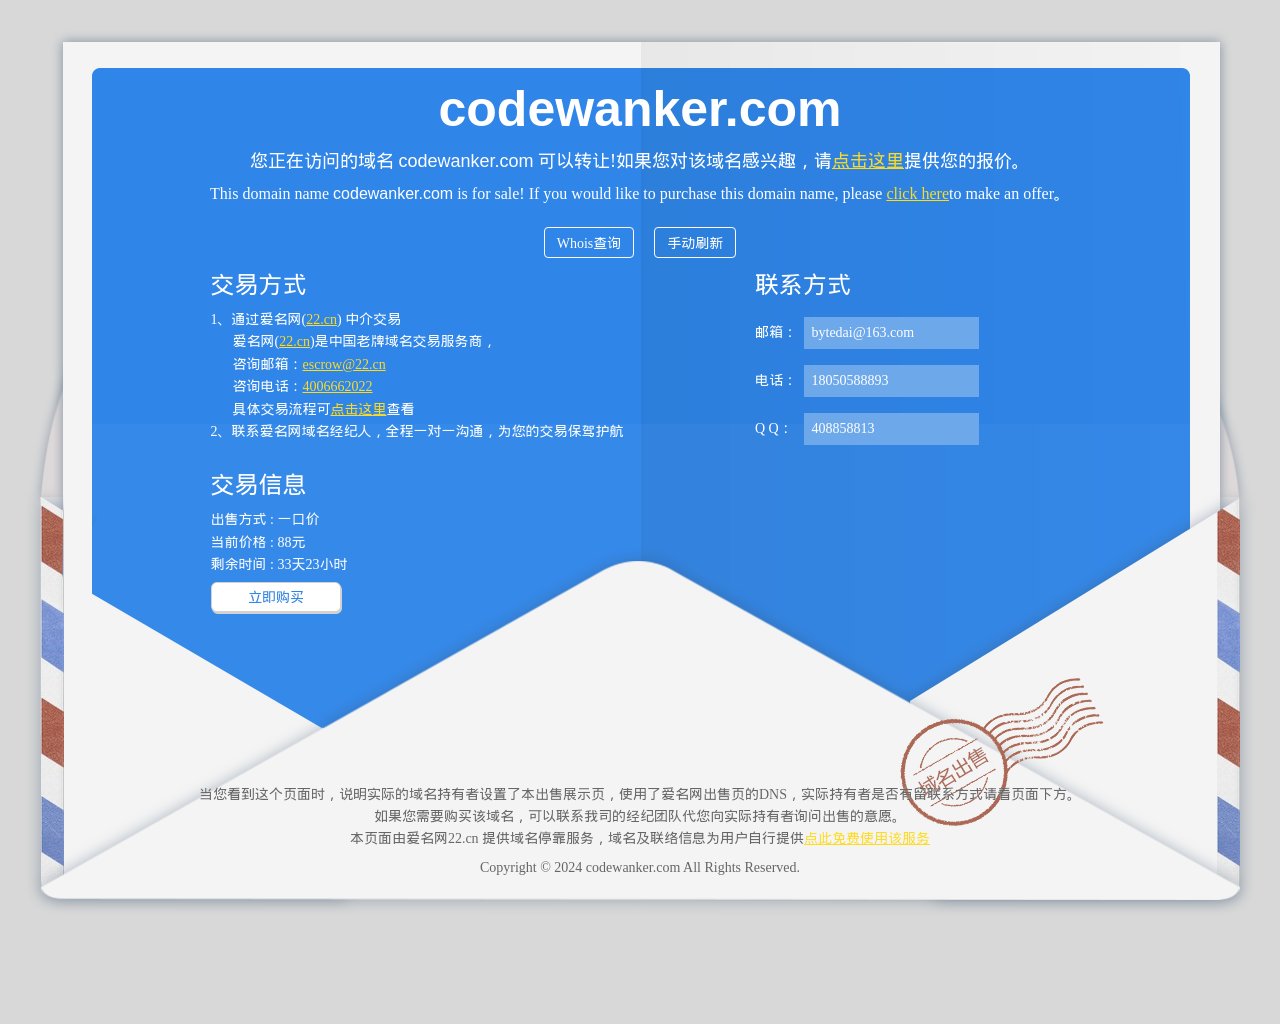 codewanker.com